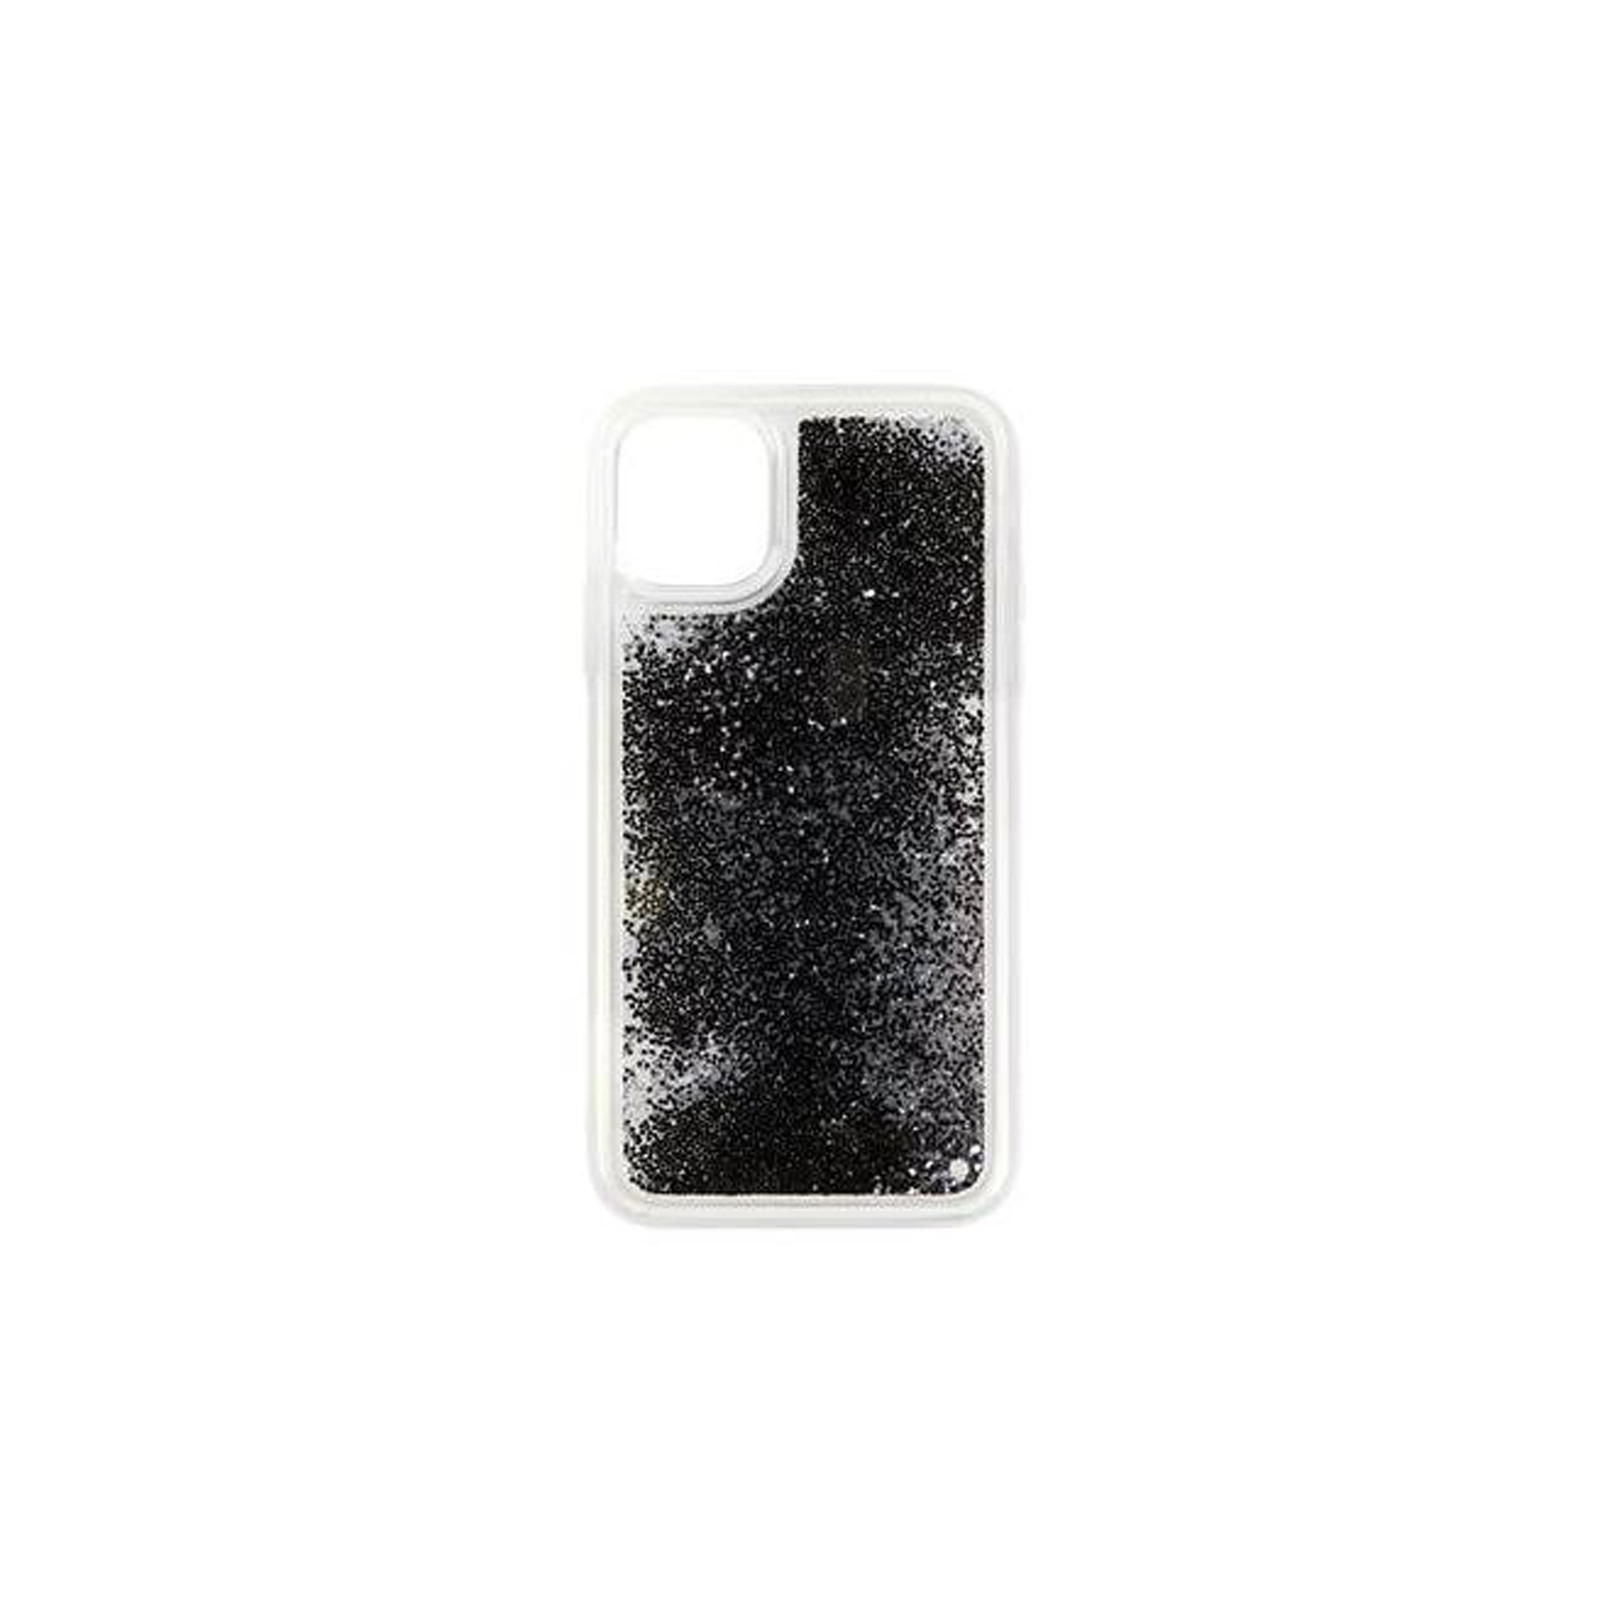 DHC Case iPhone 12 Mini [Glitter] [Brand New]